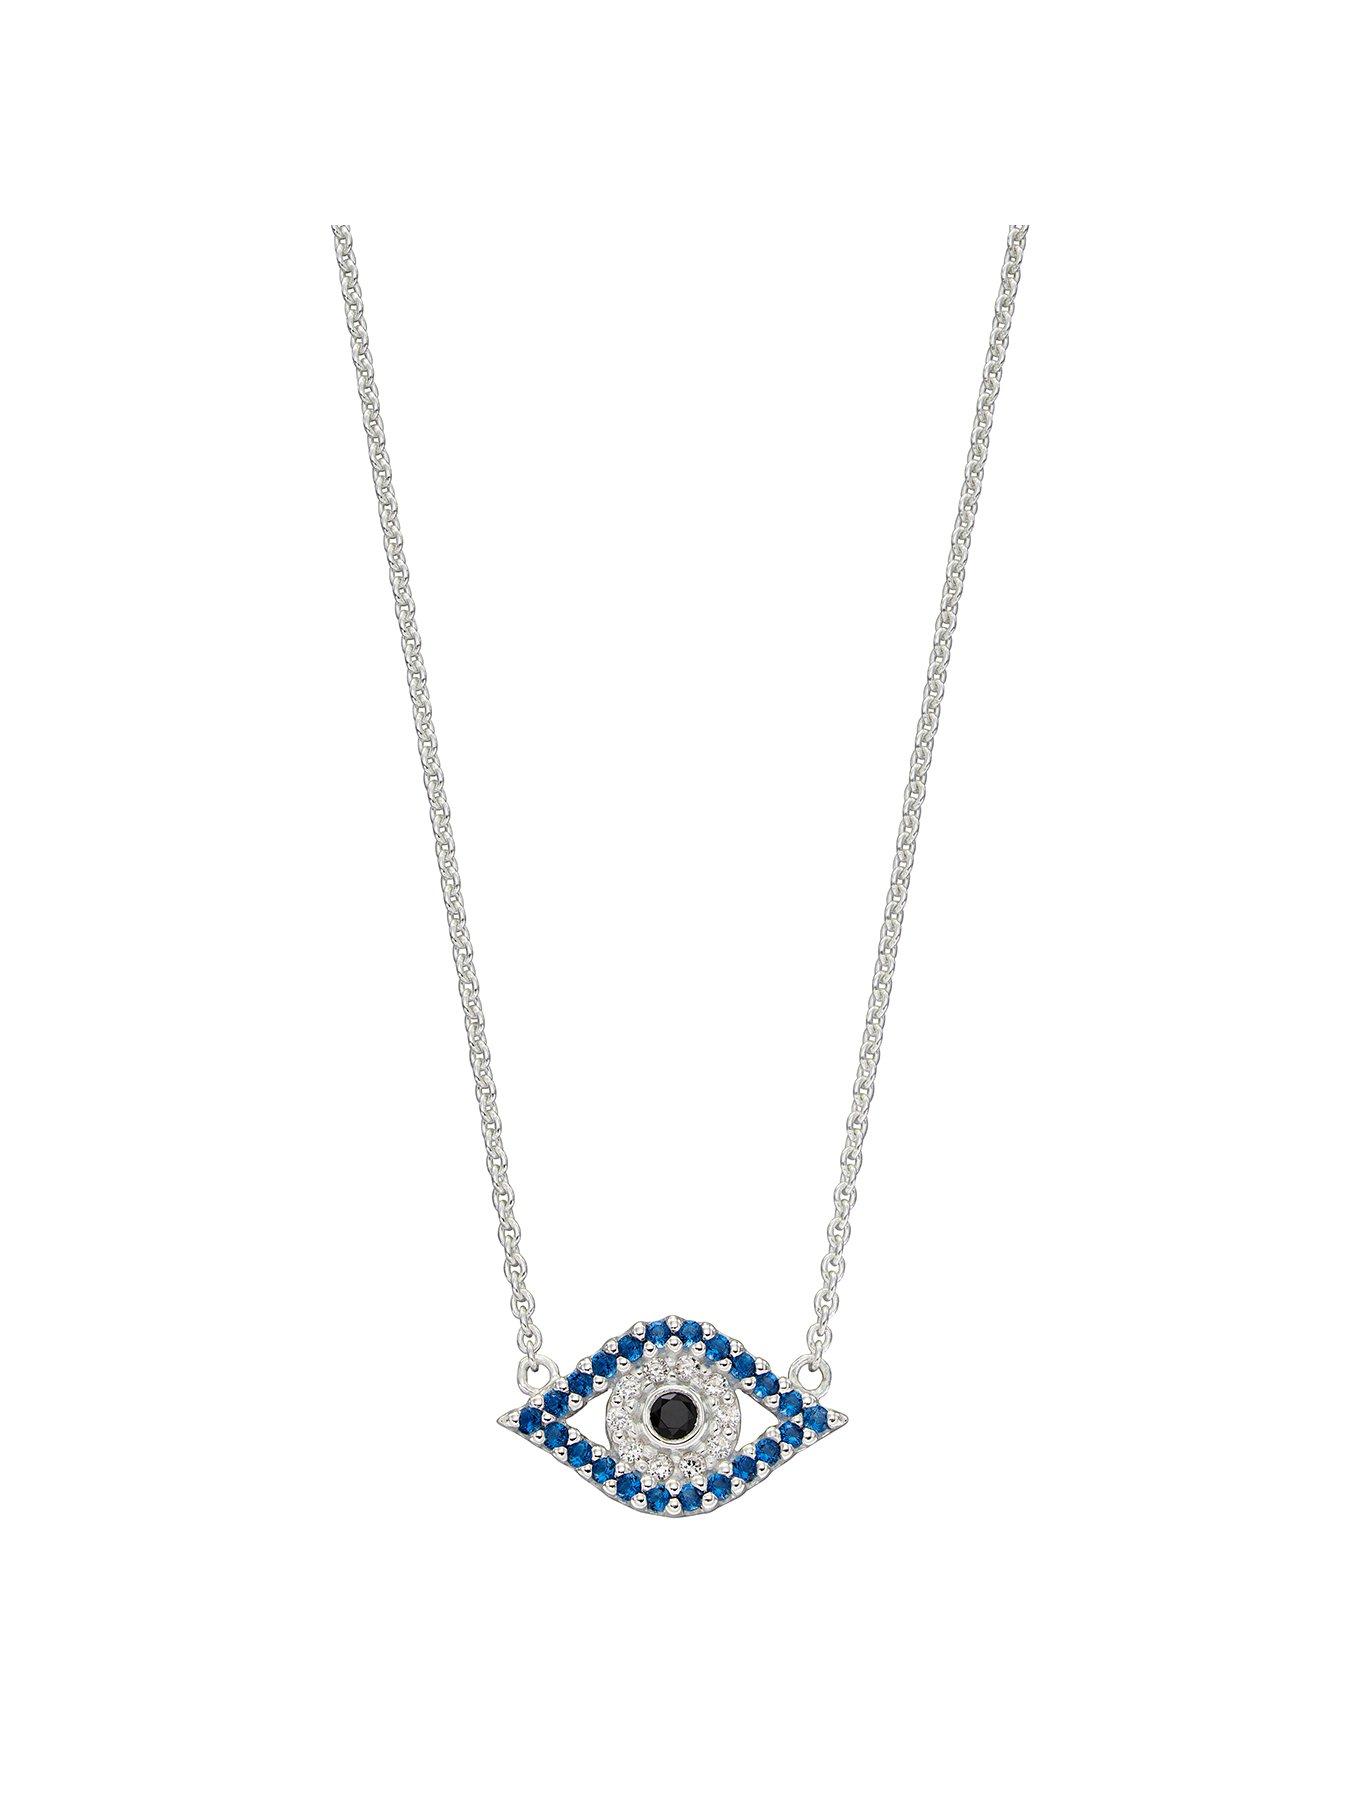  Sterling Silver Evil Eye Pendant Necklace